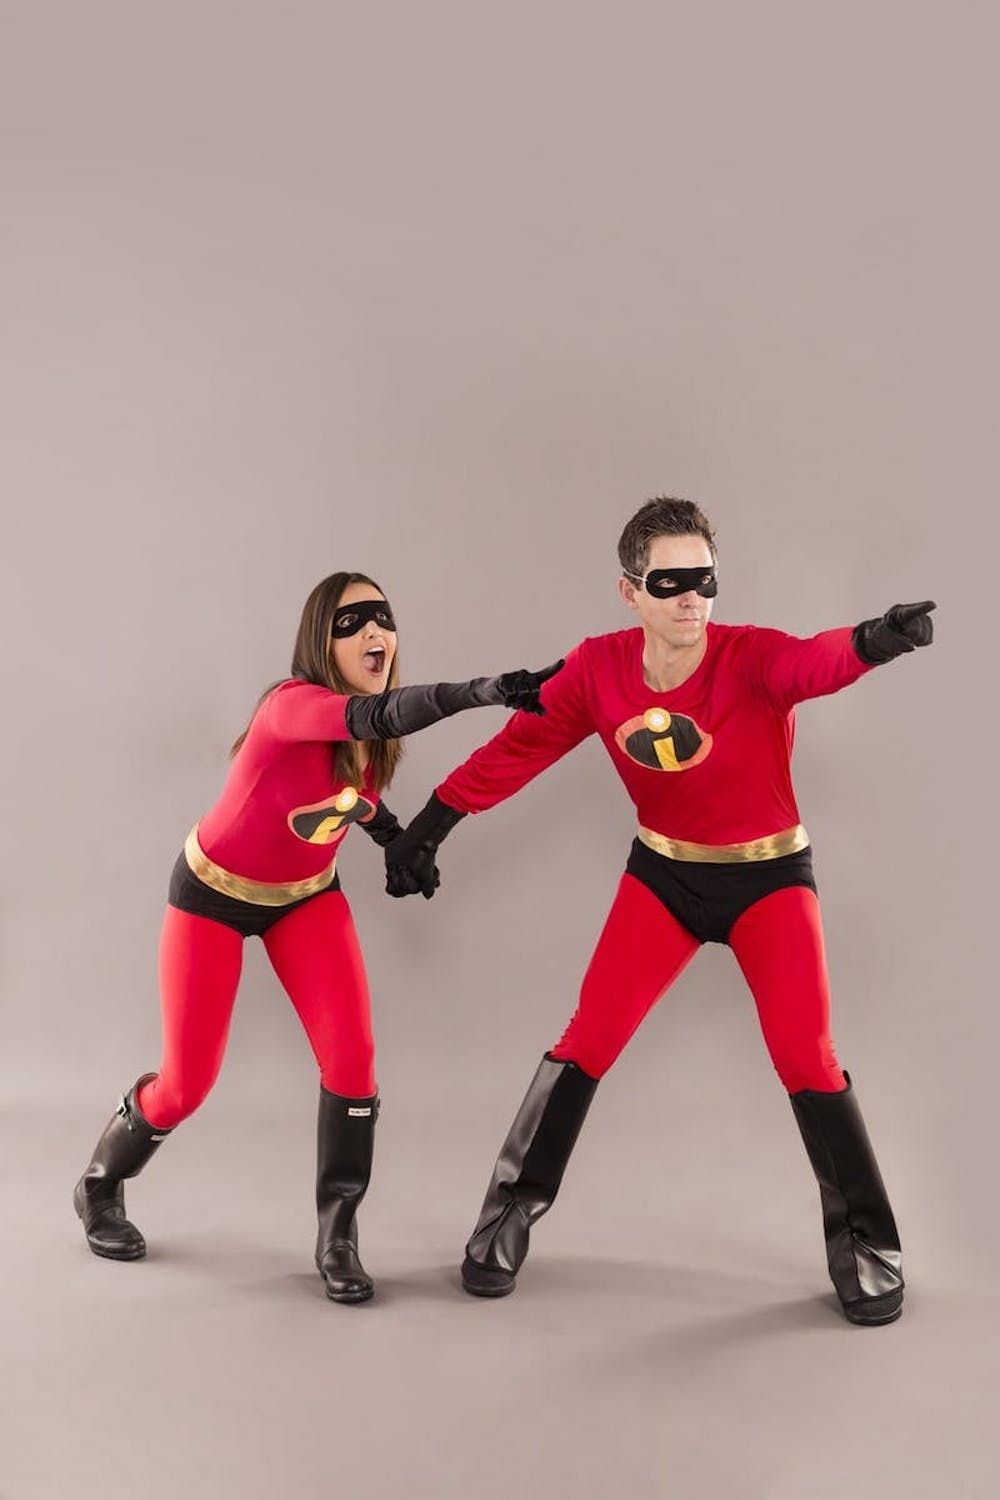 cool superhero costumes